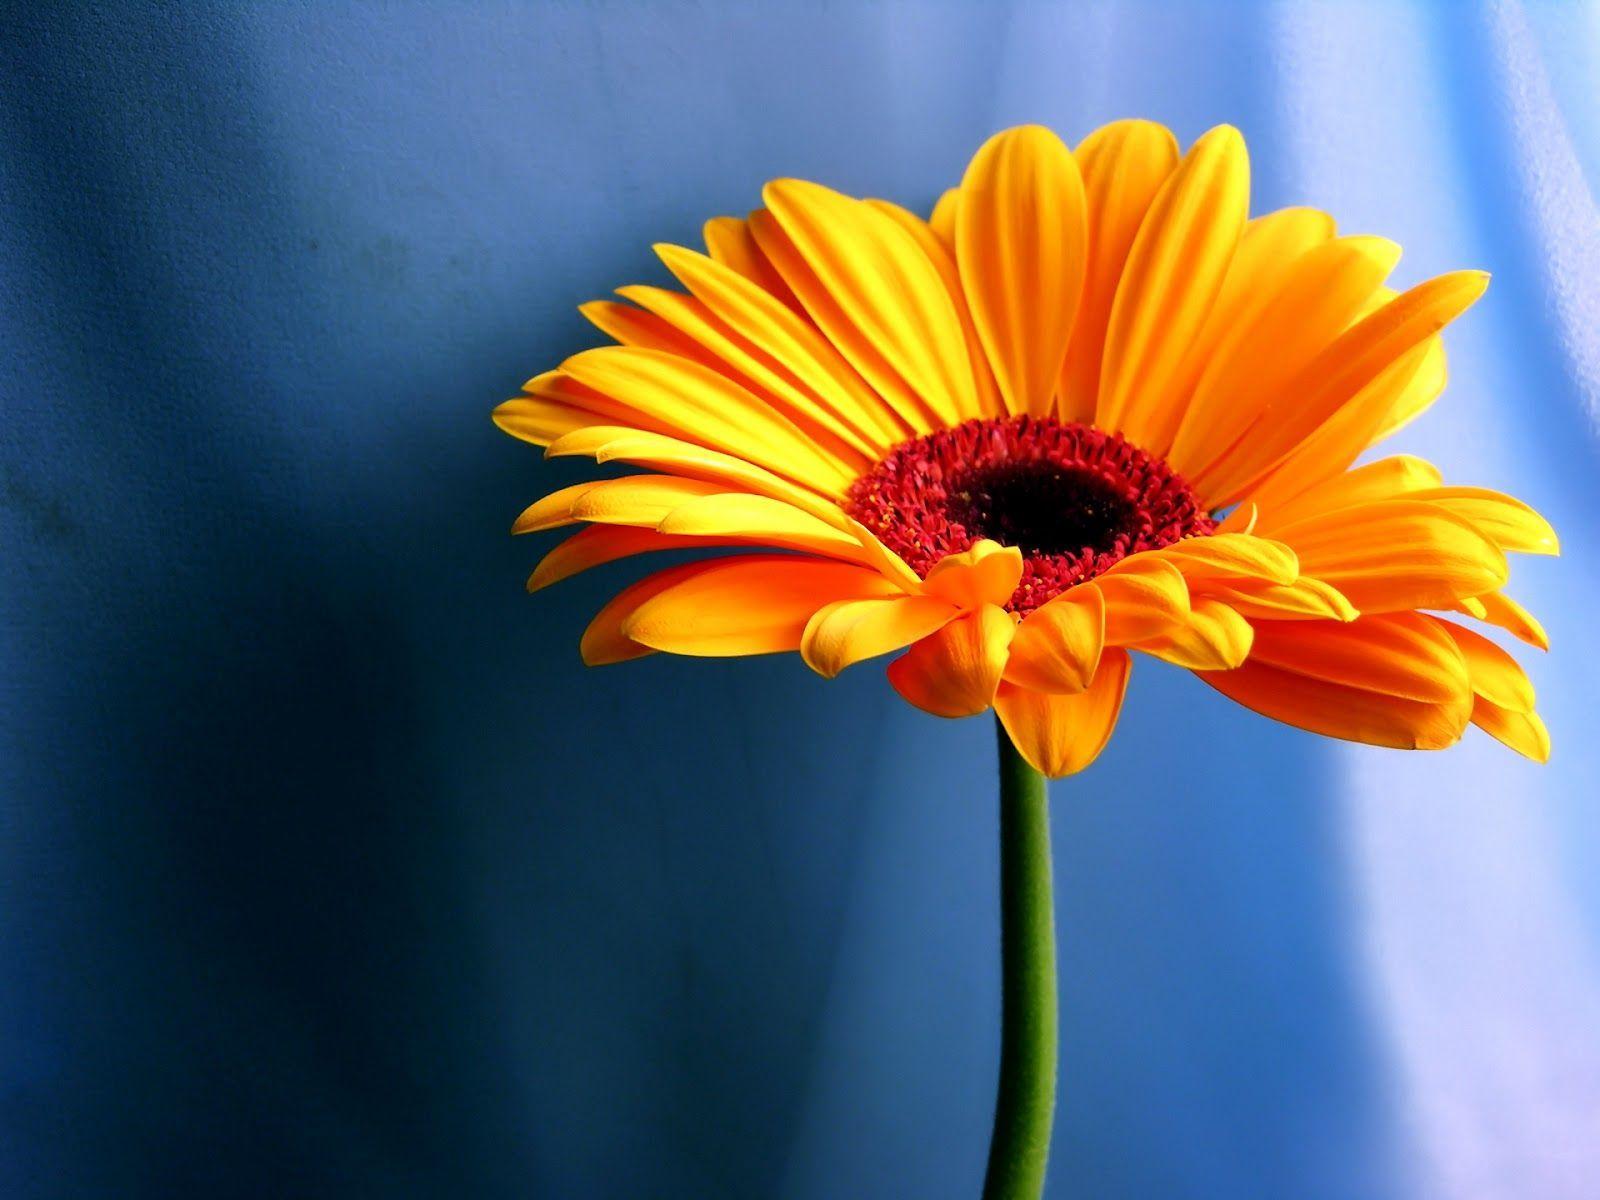 flowers for flower lovers.: Daisy flowers desktop wallpaper